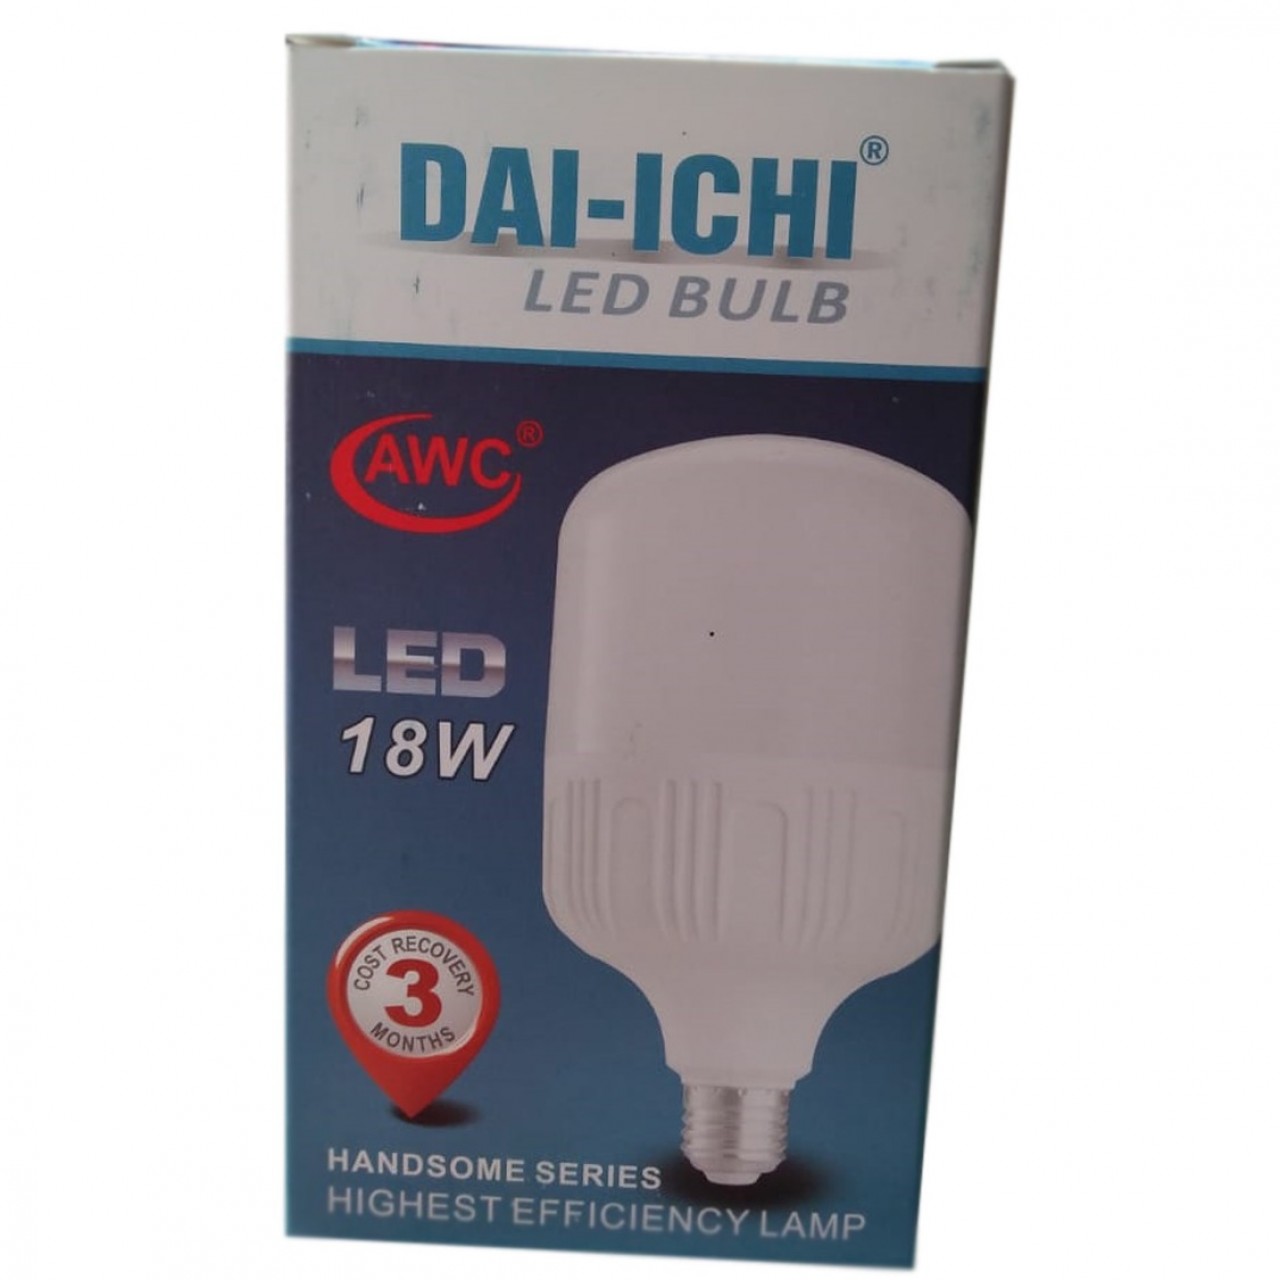 DAI-ICHI LED Bulb - 18 Watt - 3 Months Cost Recovery